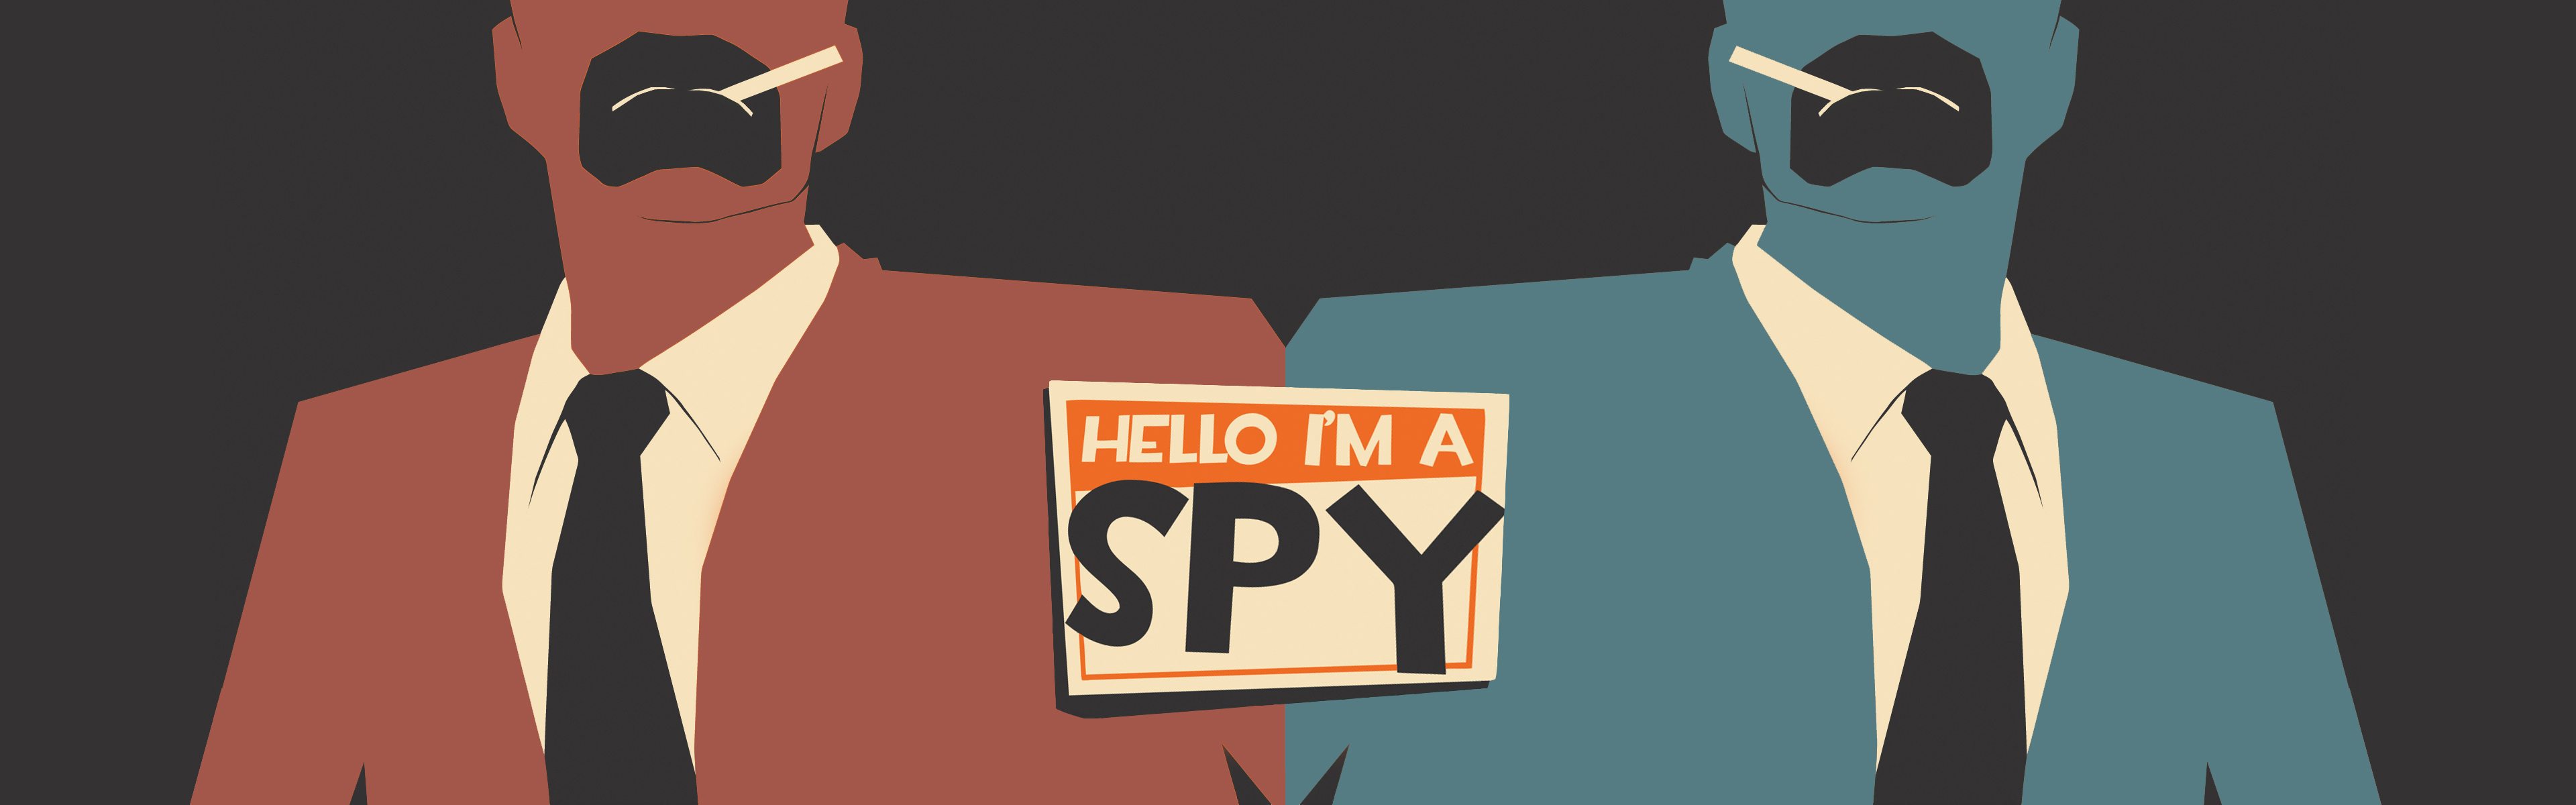 video games, Spy TF2, Team Fortress 2 - desktop wallpaper